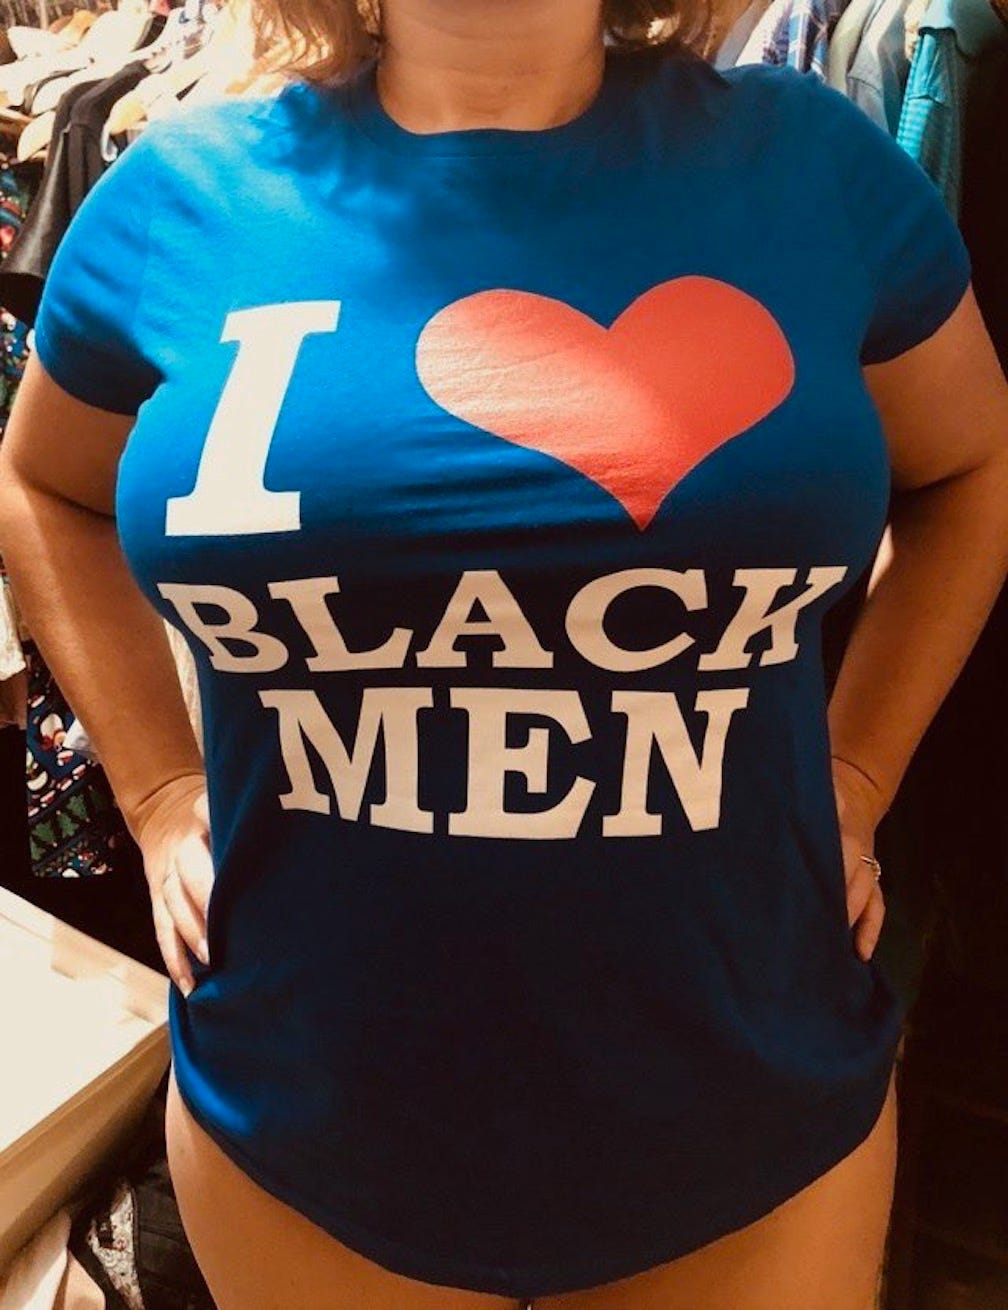 Her Black Cock Addiction image